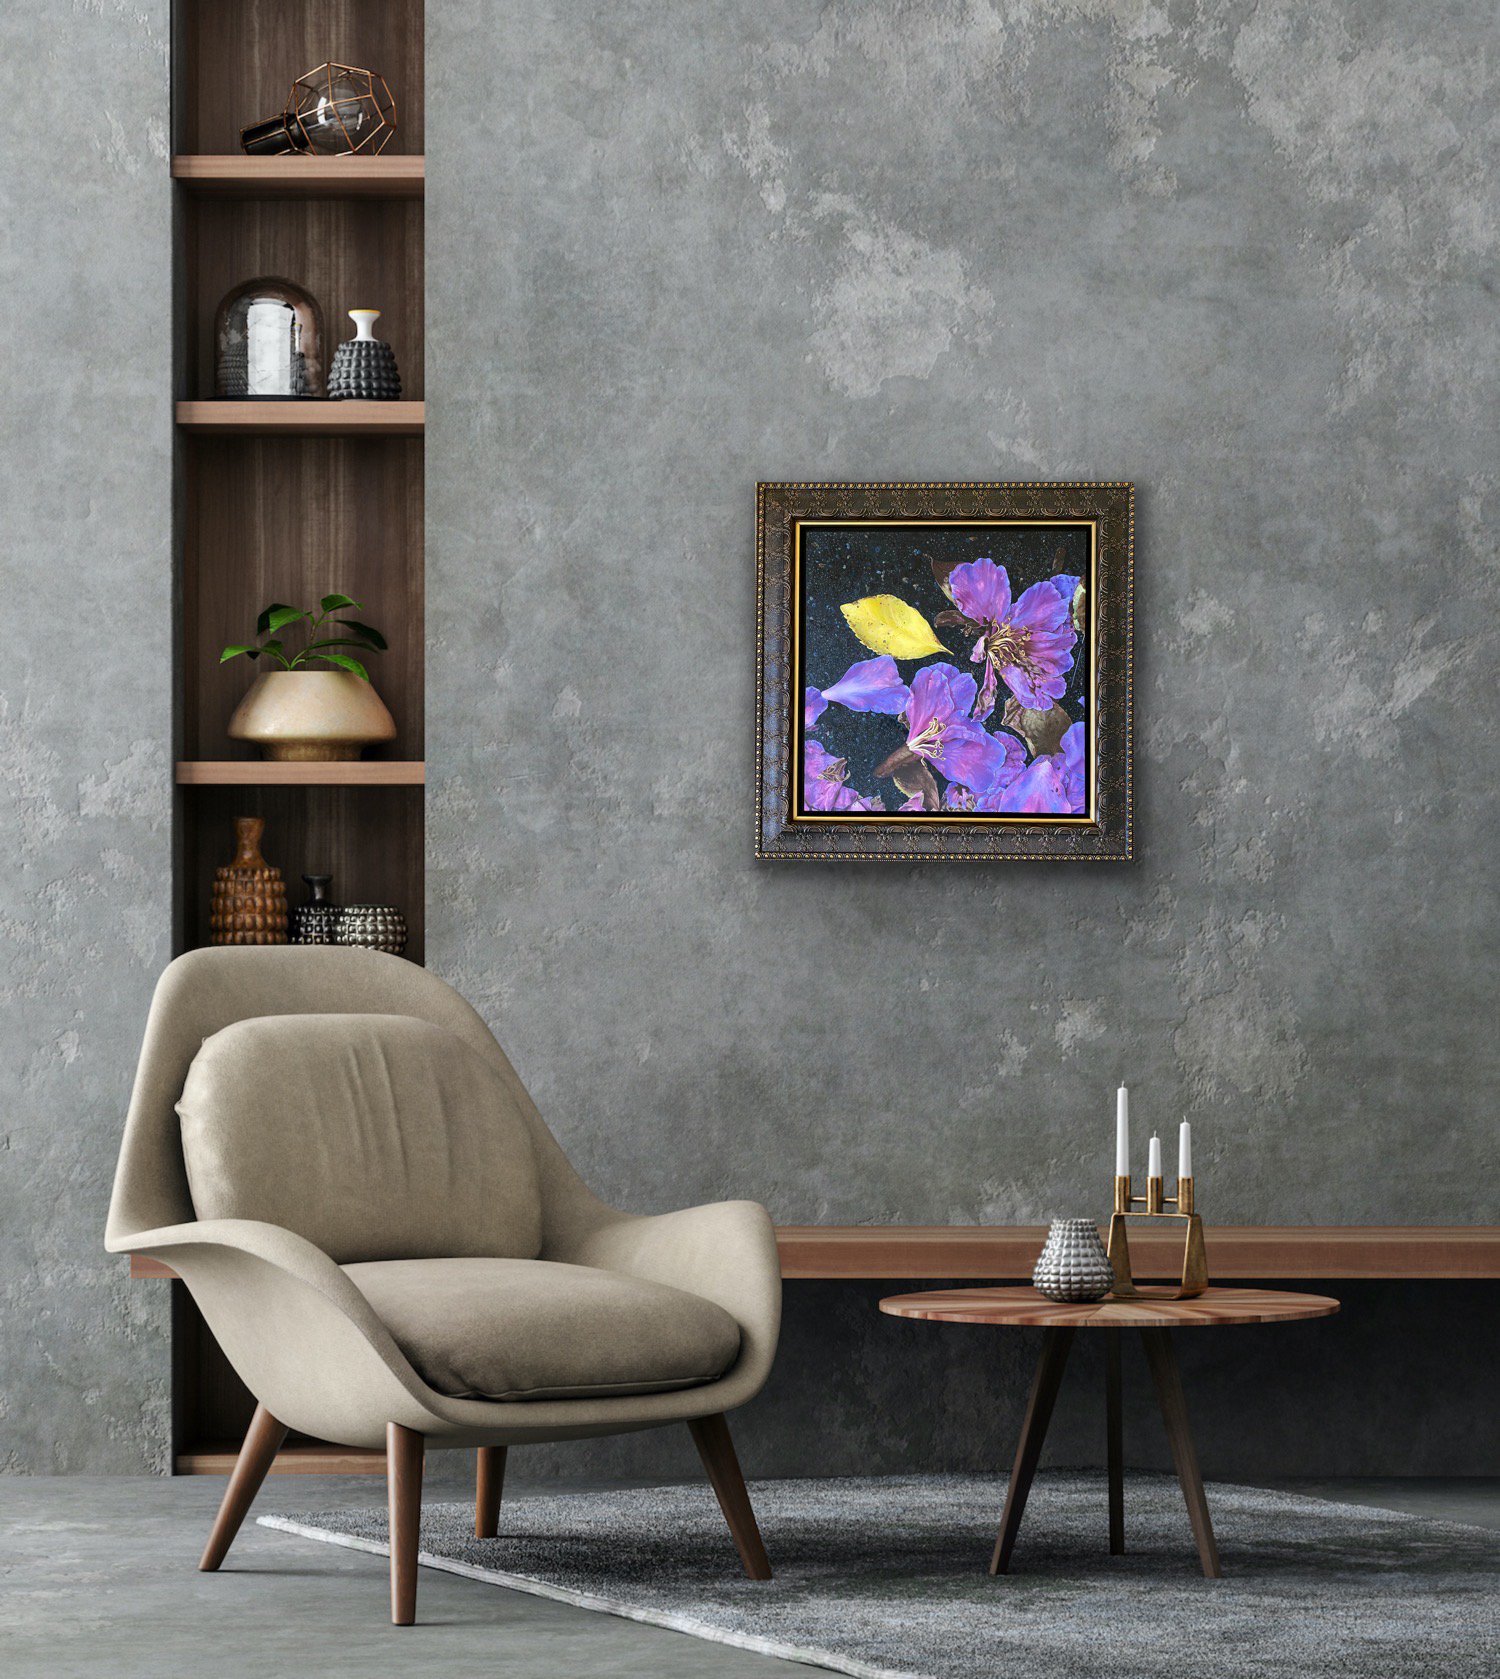 D Liguori Art and Story_Raining Petals_24x24 Oil on Canvas_Framed_Grey LR Wall.jpg